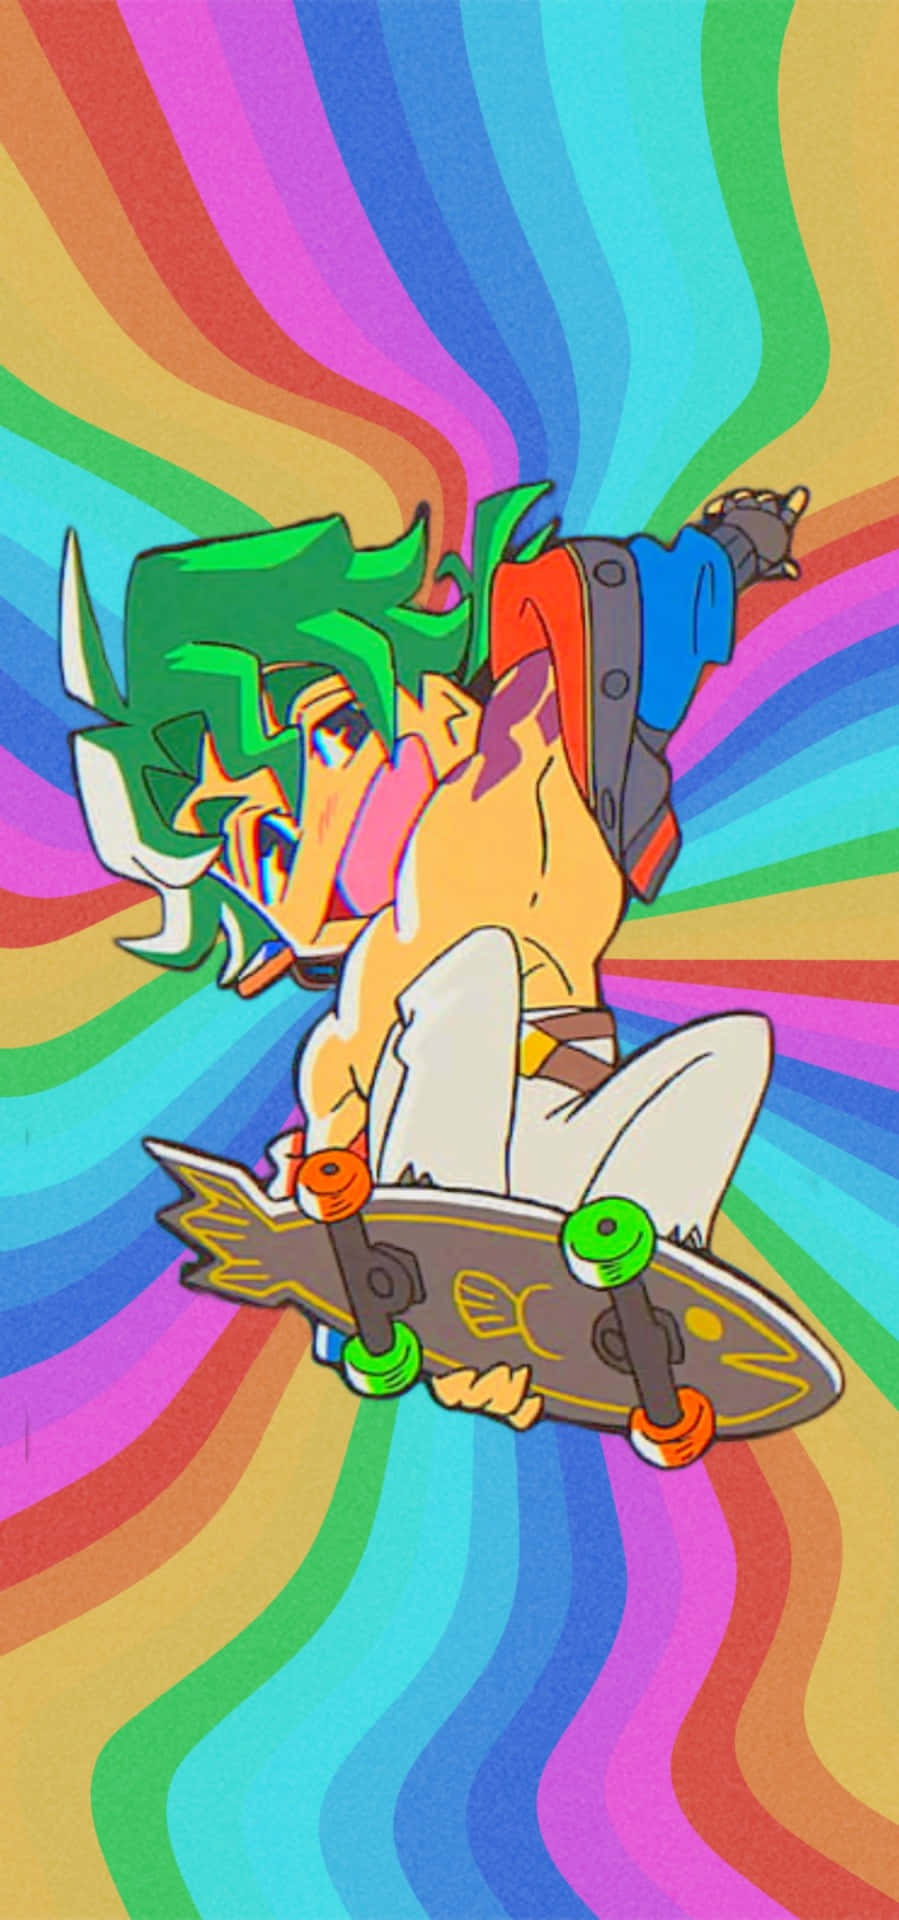 Bisexual Skateboarder Art Wallpaper